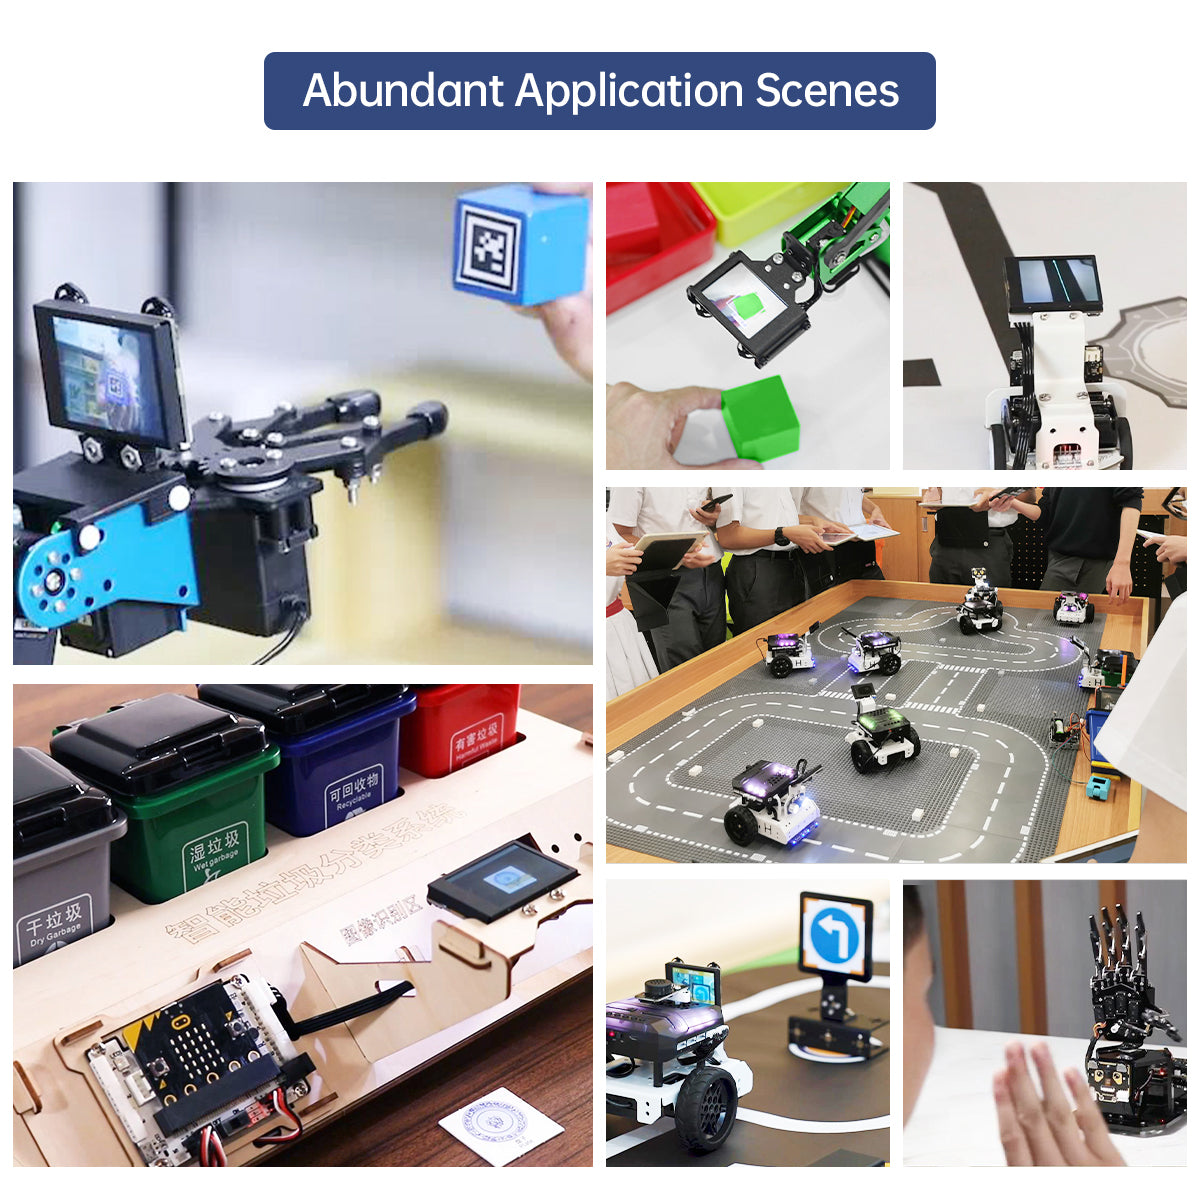 Hiwonder WonderCam AI Vision Camera Robot Vision Module